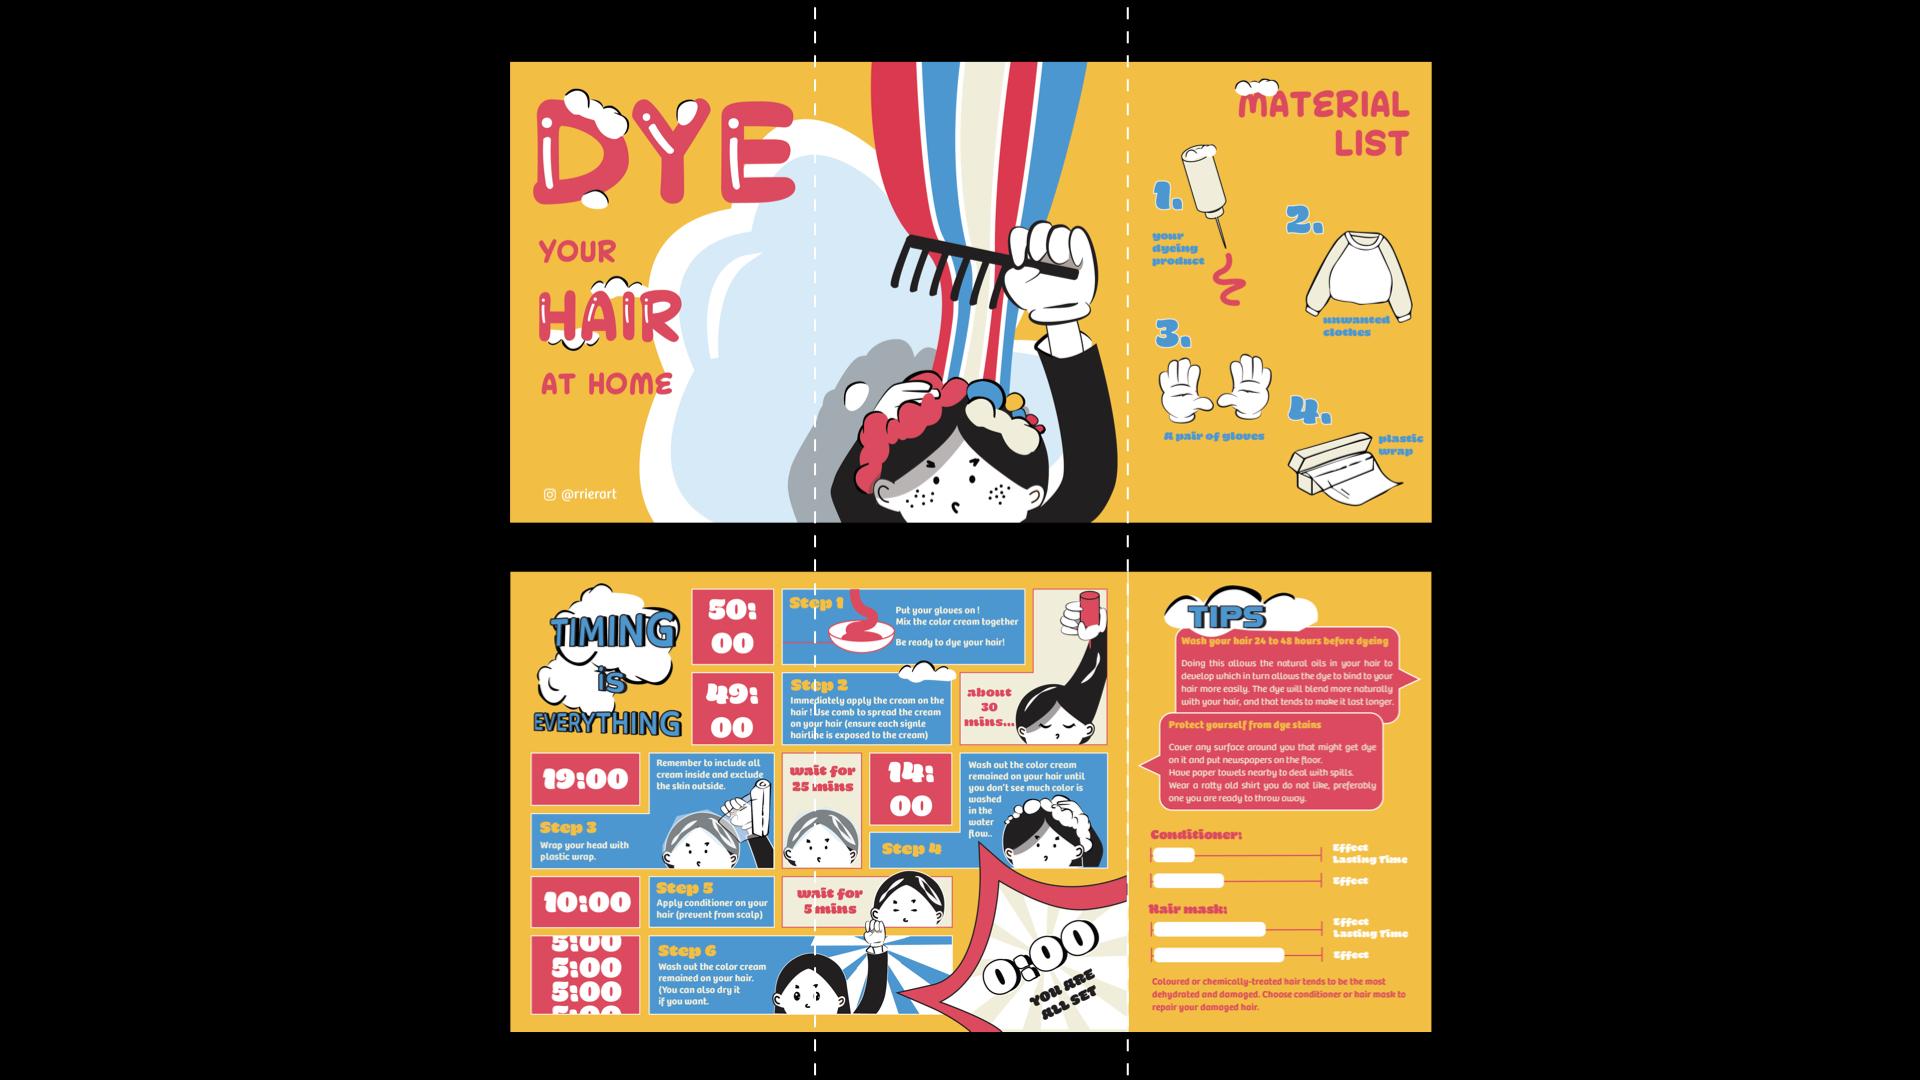 Dye Your Hair at Home Manual by Jinyue Wang